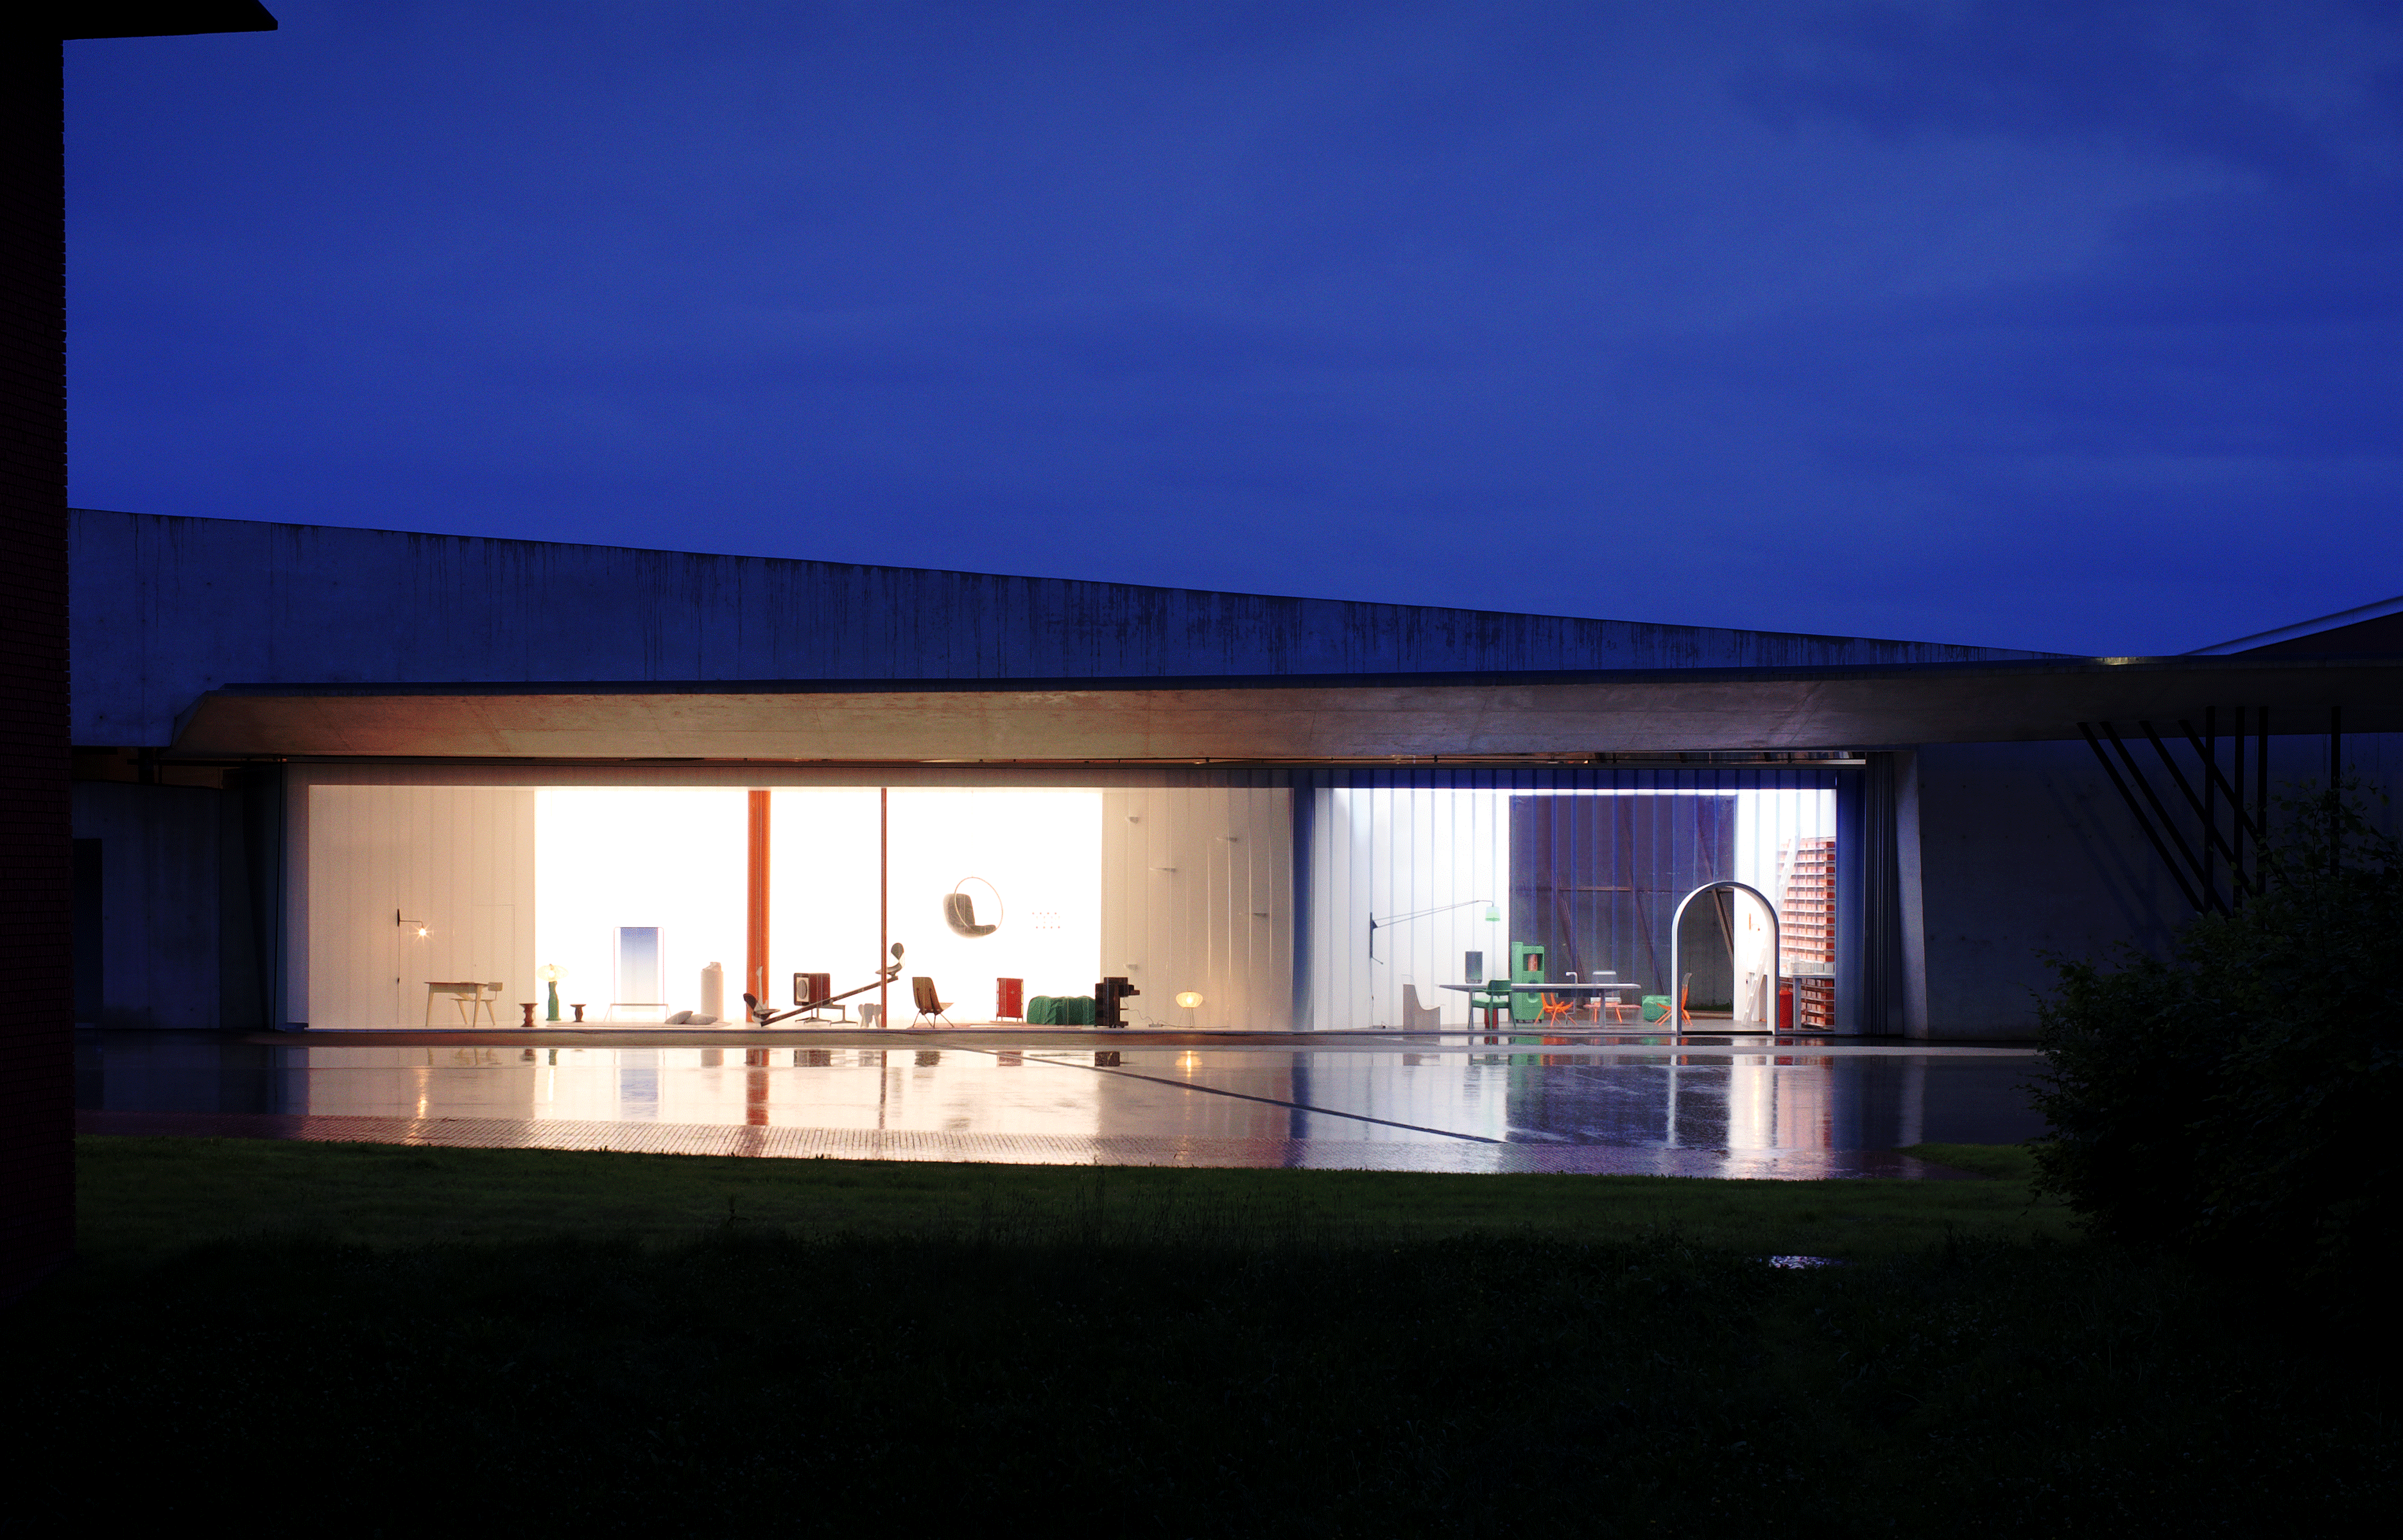 La caserne de pompiers conçue par Zaha Hadid au Vitra Campus, abrite l’installation Twentythirtyfive.